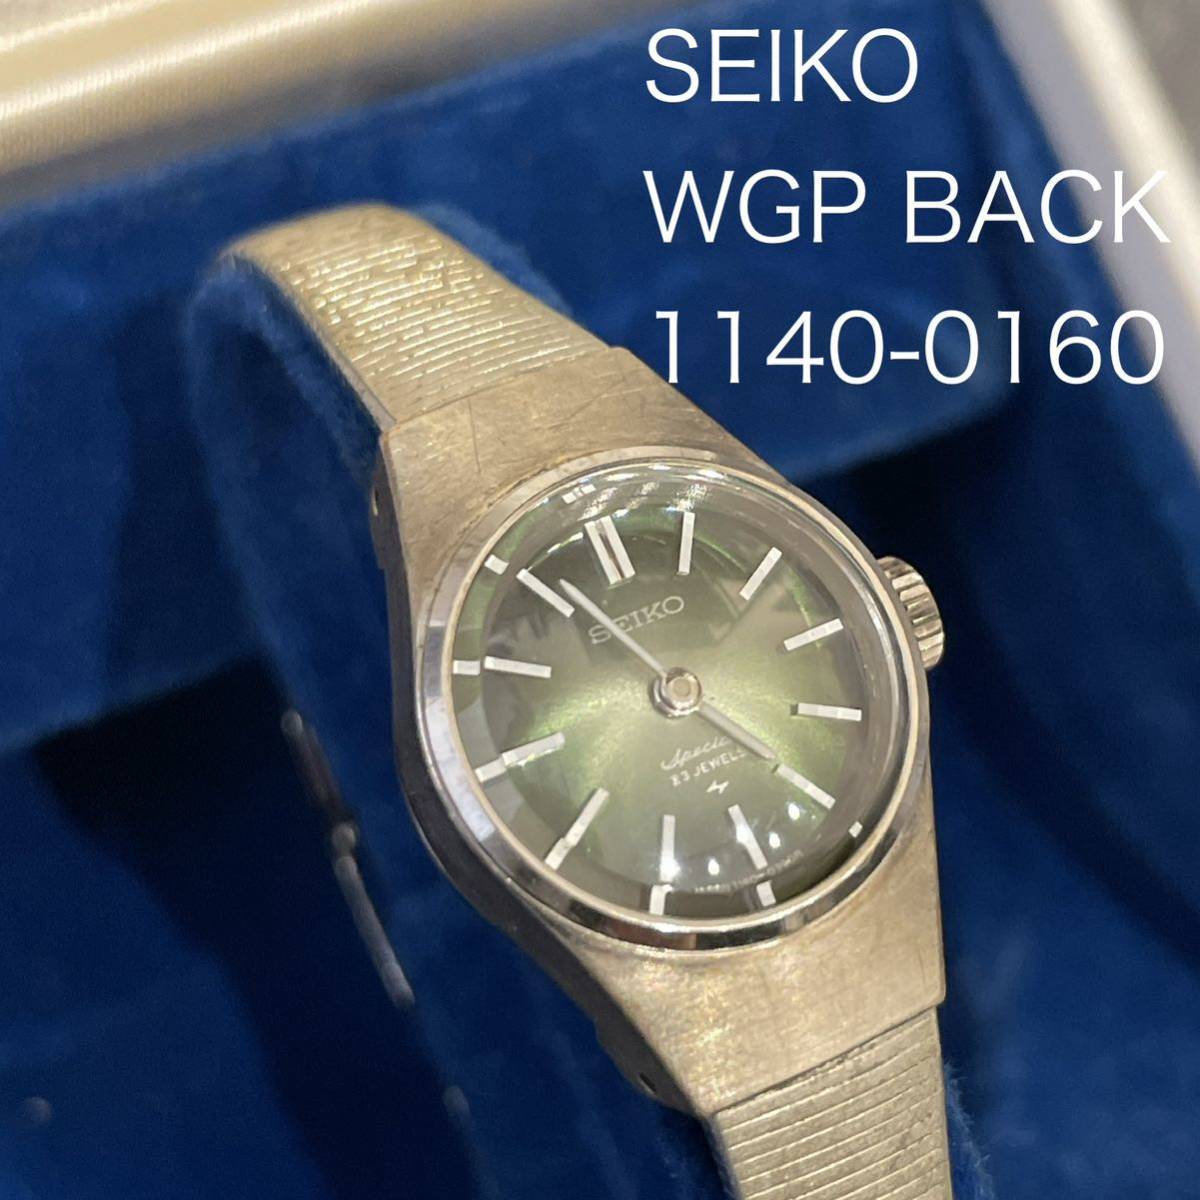 SEIKOセイコー 腕時計 WGP BACK 1140-0160 手巻き式 / シチズン FREE WAY フリーウェイ 腕時計 1032-A42951 セット_画像2